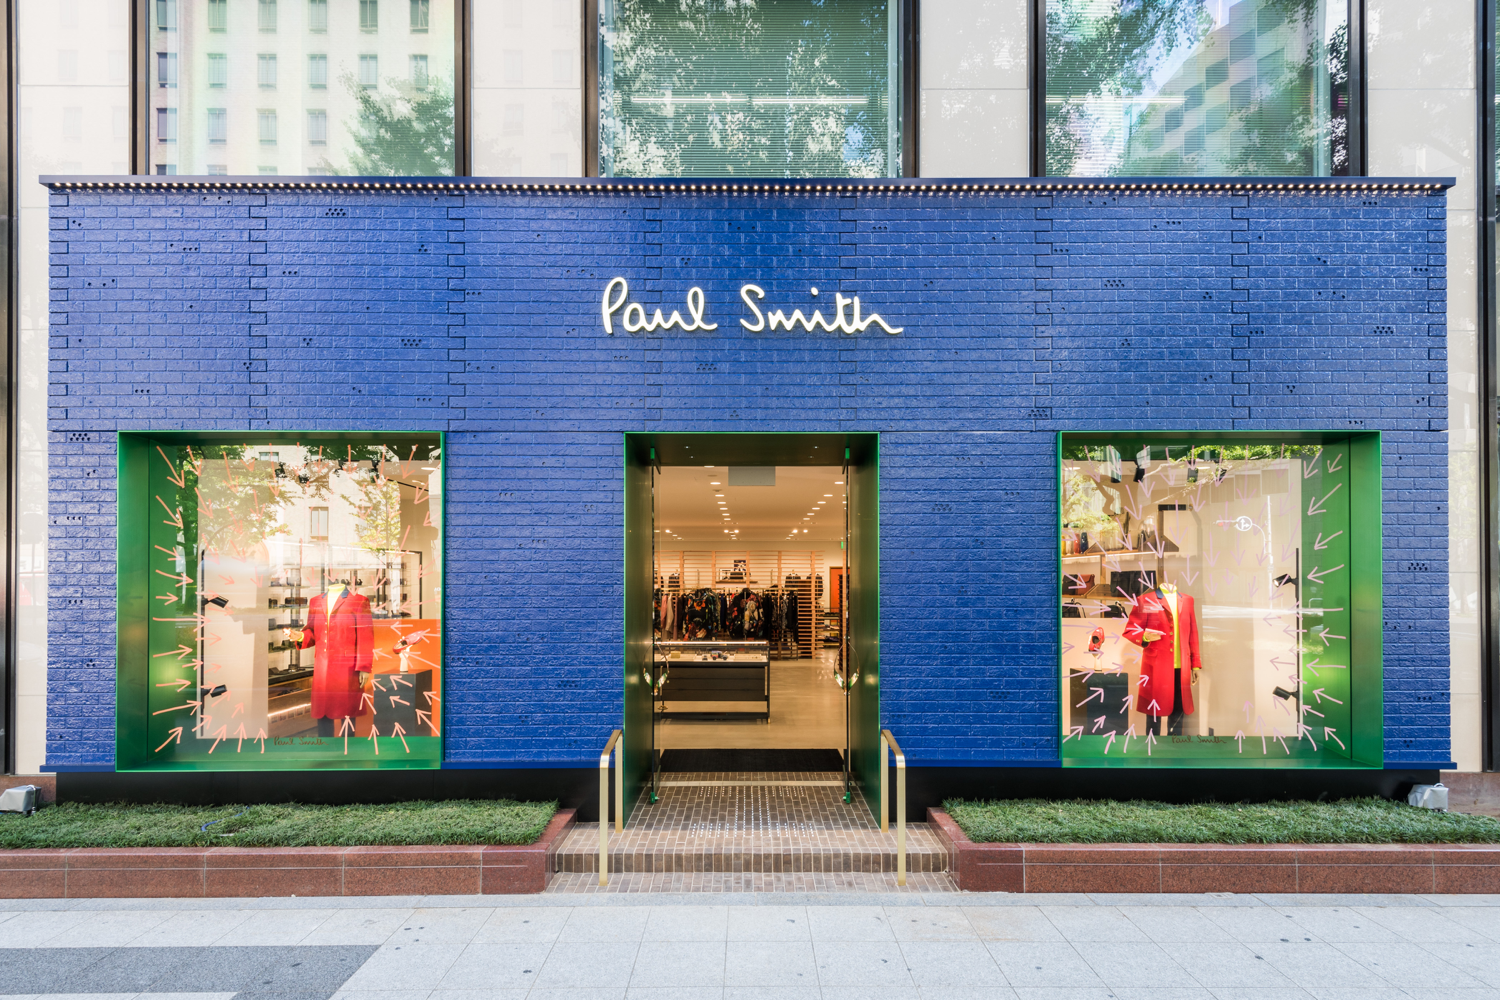 Osaka: Paul Smith flagship store opening | superfuture®